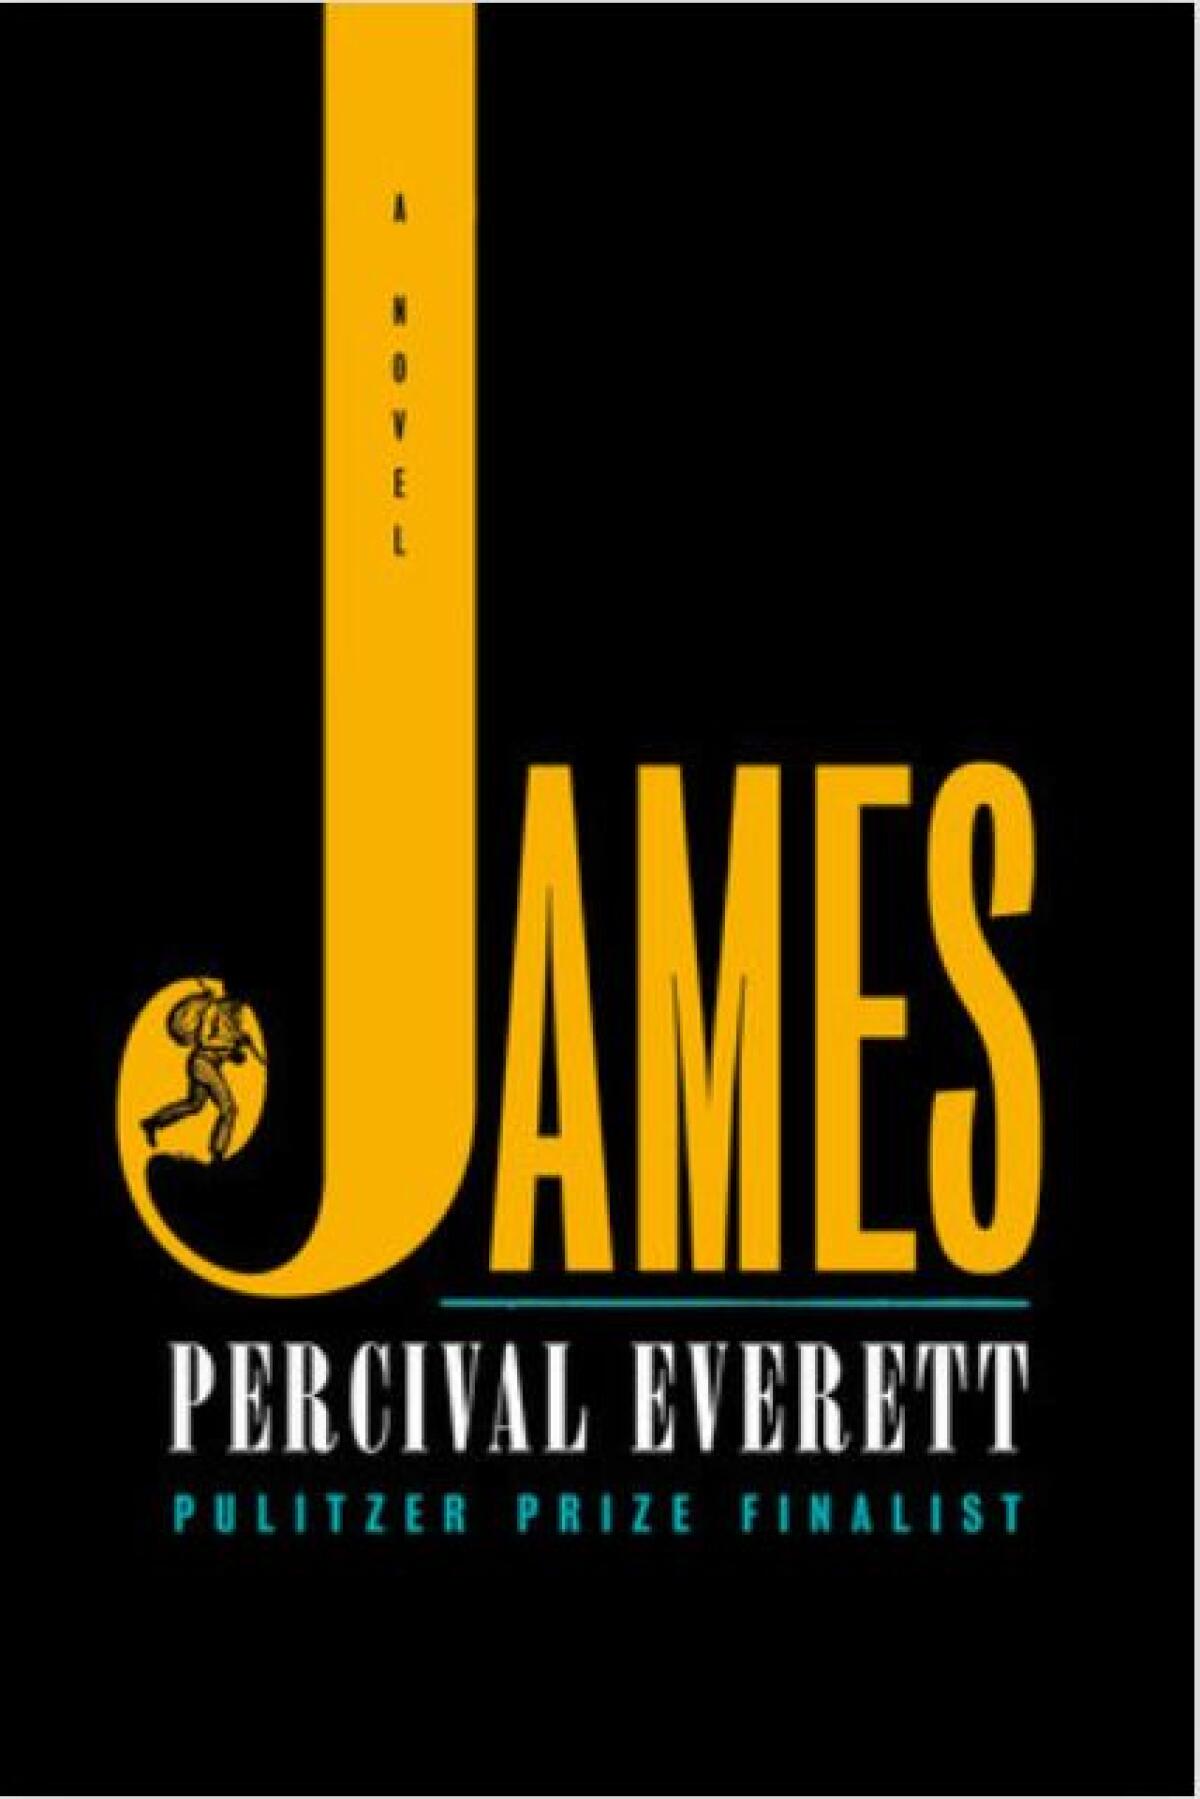 "James," von Percival Everett